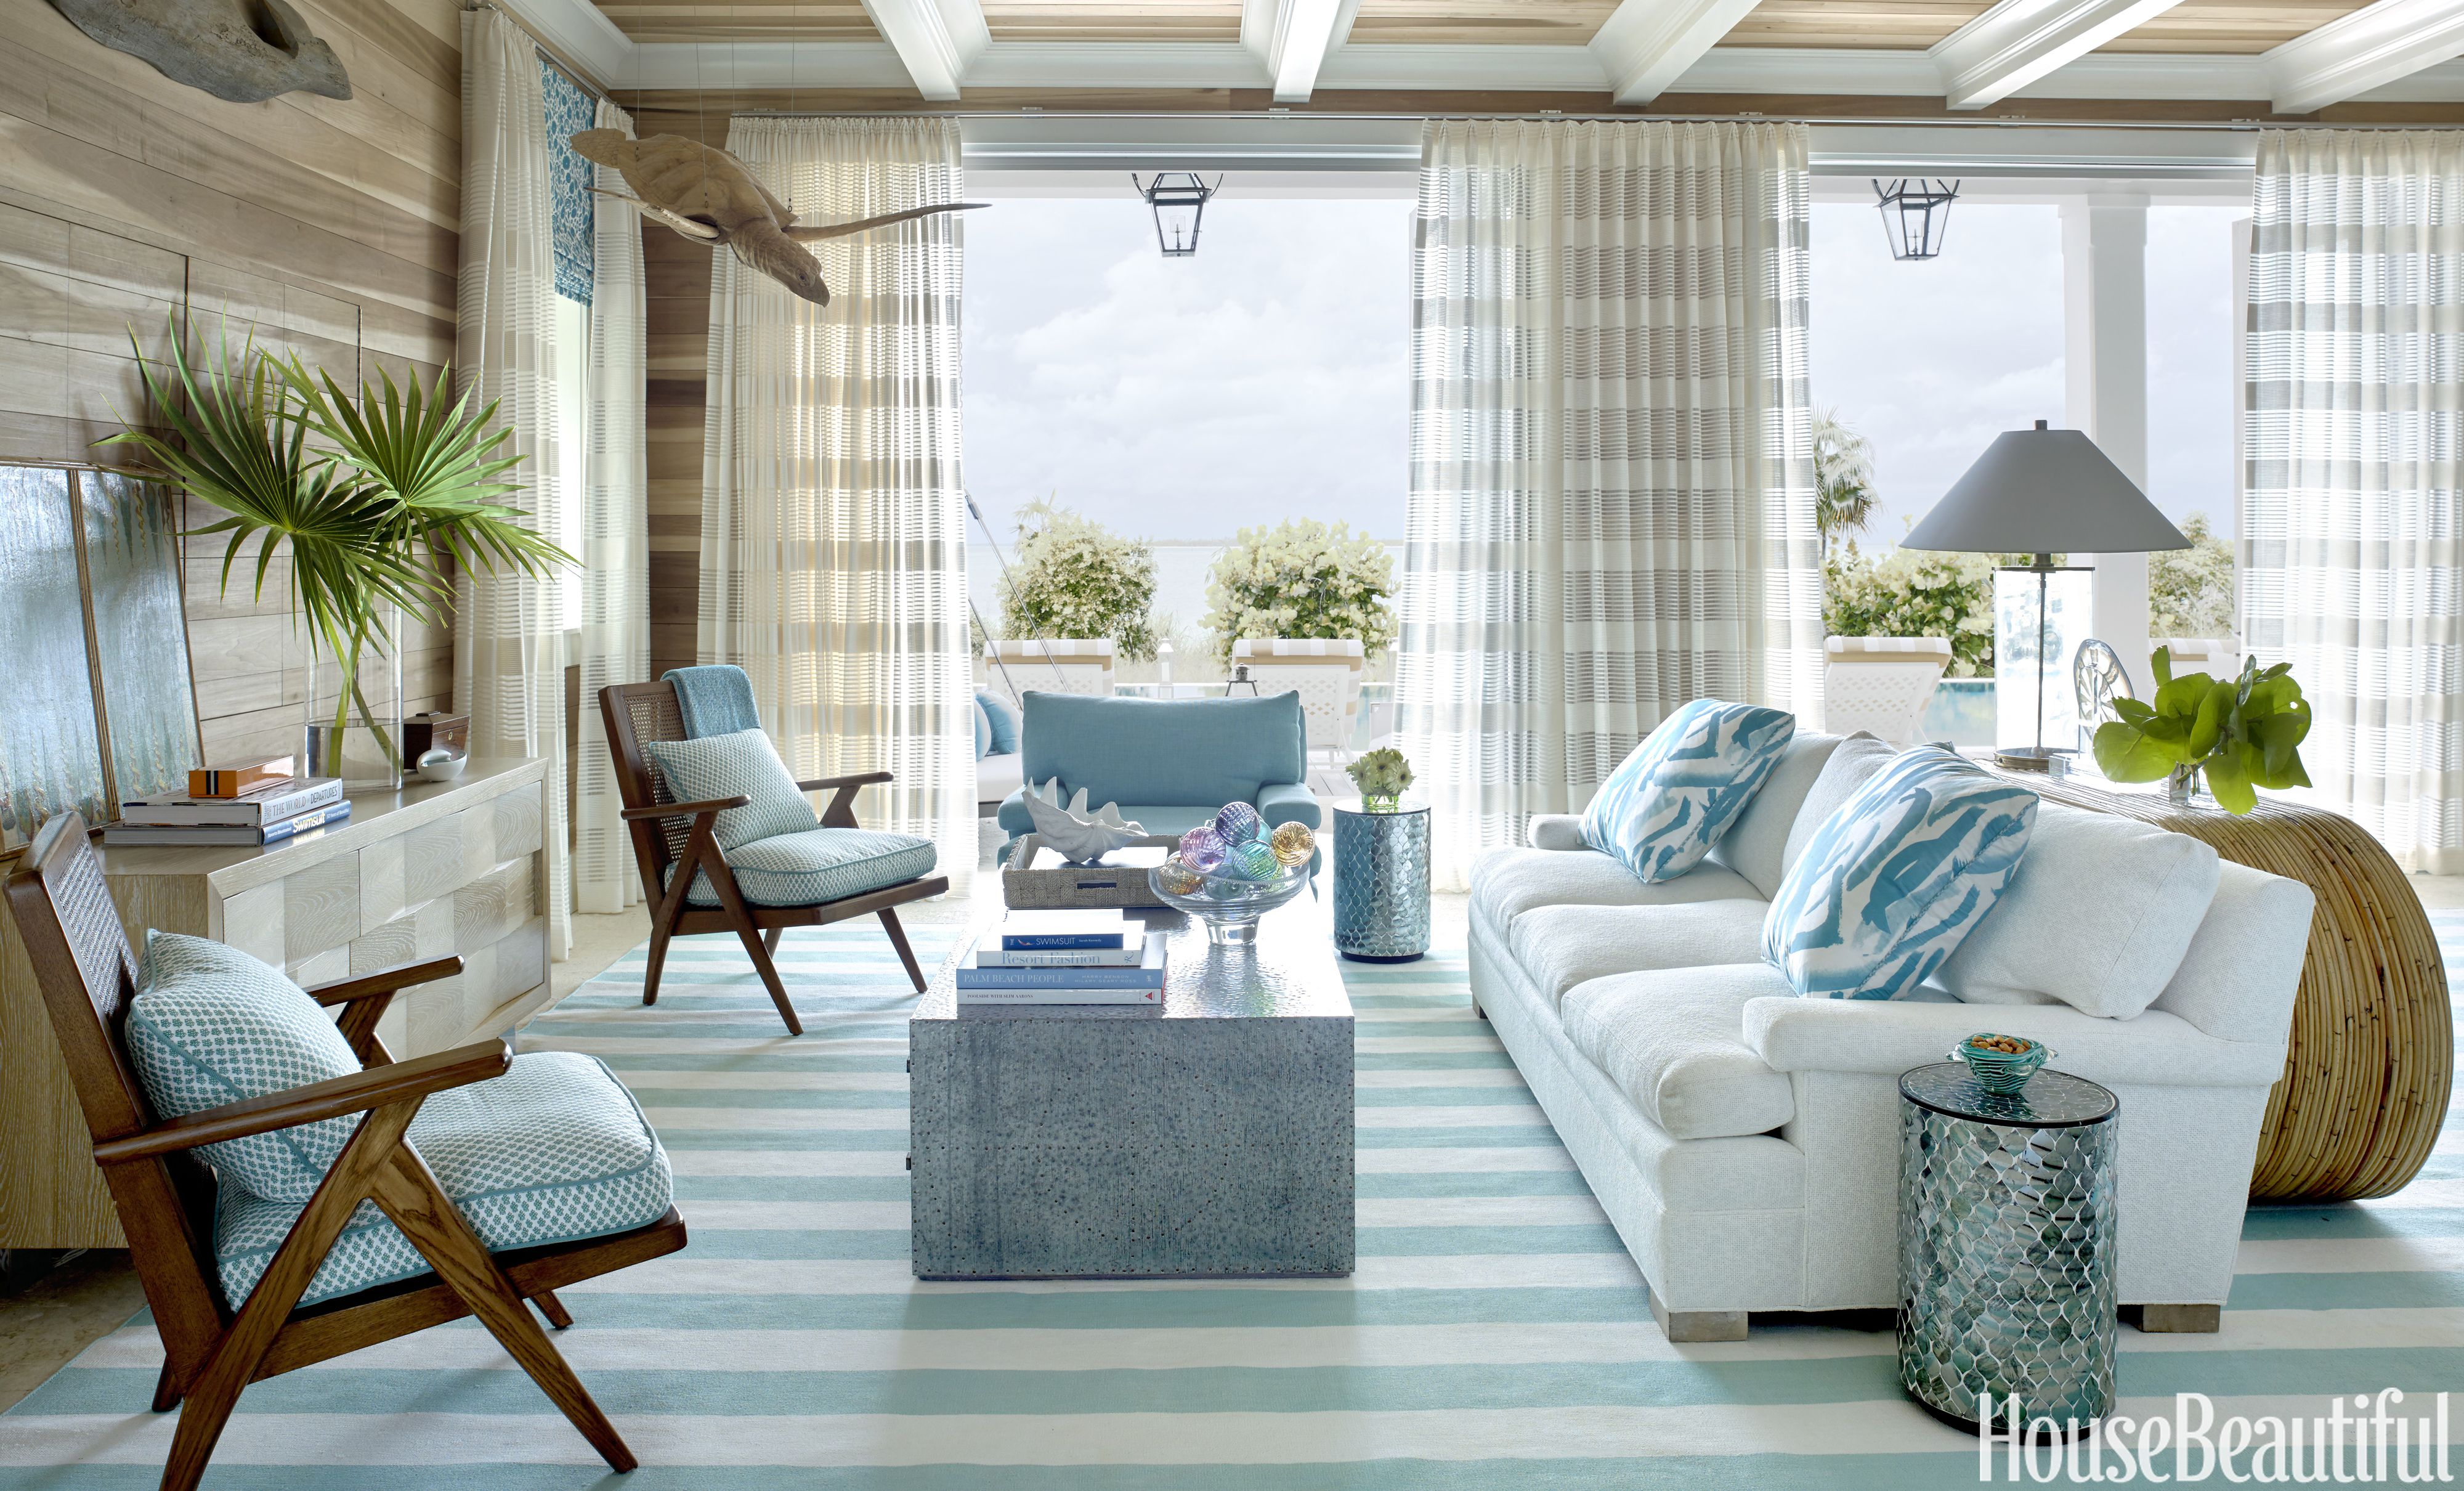 Living Room Designs 70 Best Living Room Decorating Ideas & Designs - housebeautiful.com ZCVPVXF